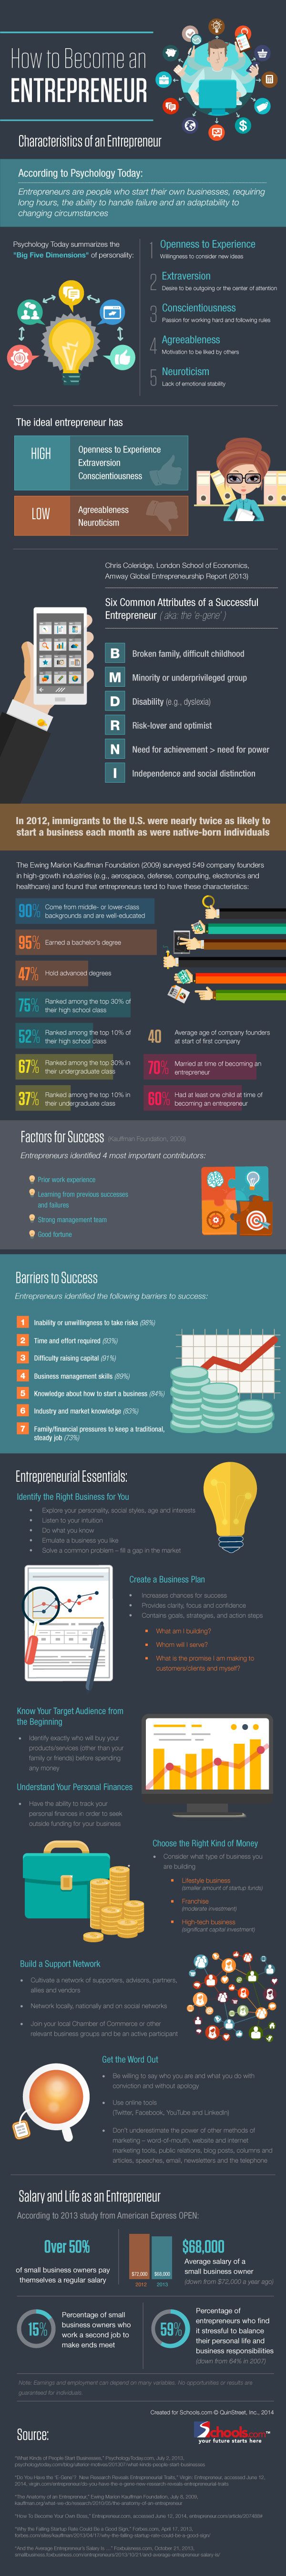 Entrepreneur Traits - Infographic